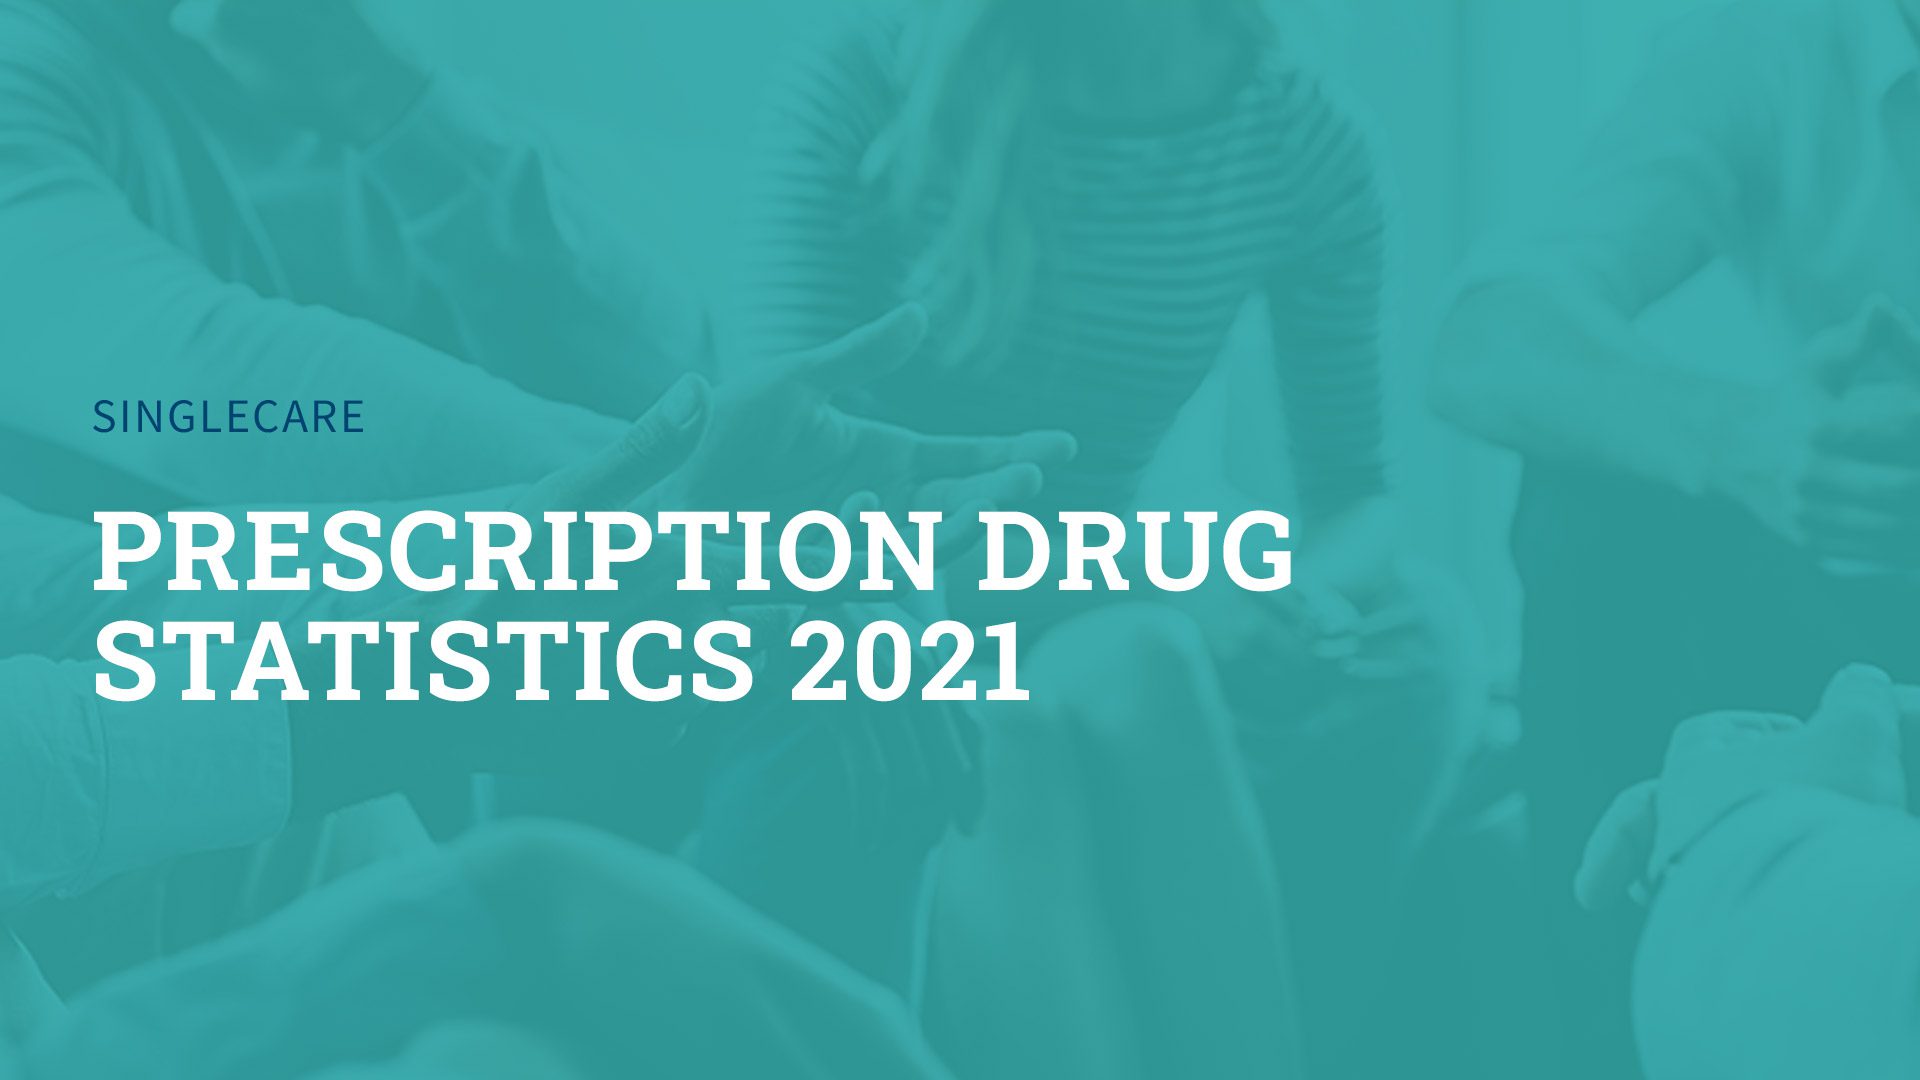 2021 Statistics on Prescription Drugs